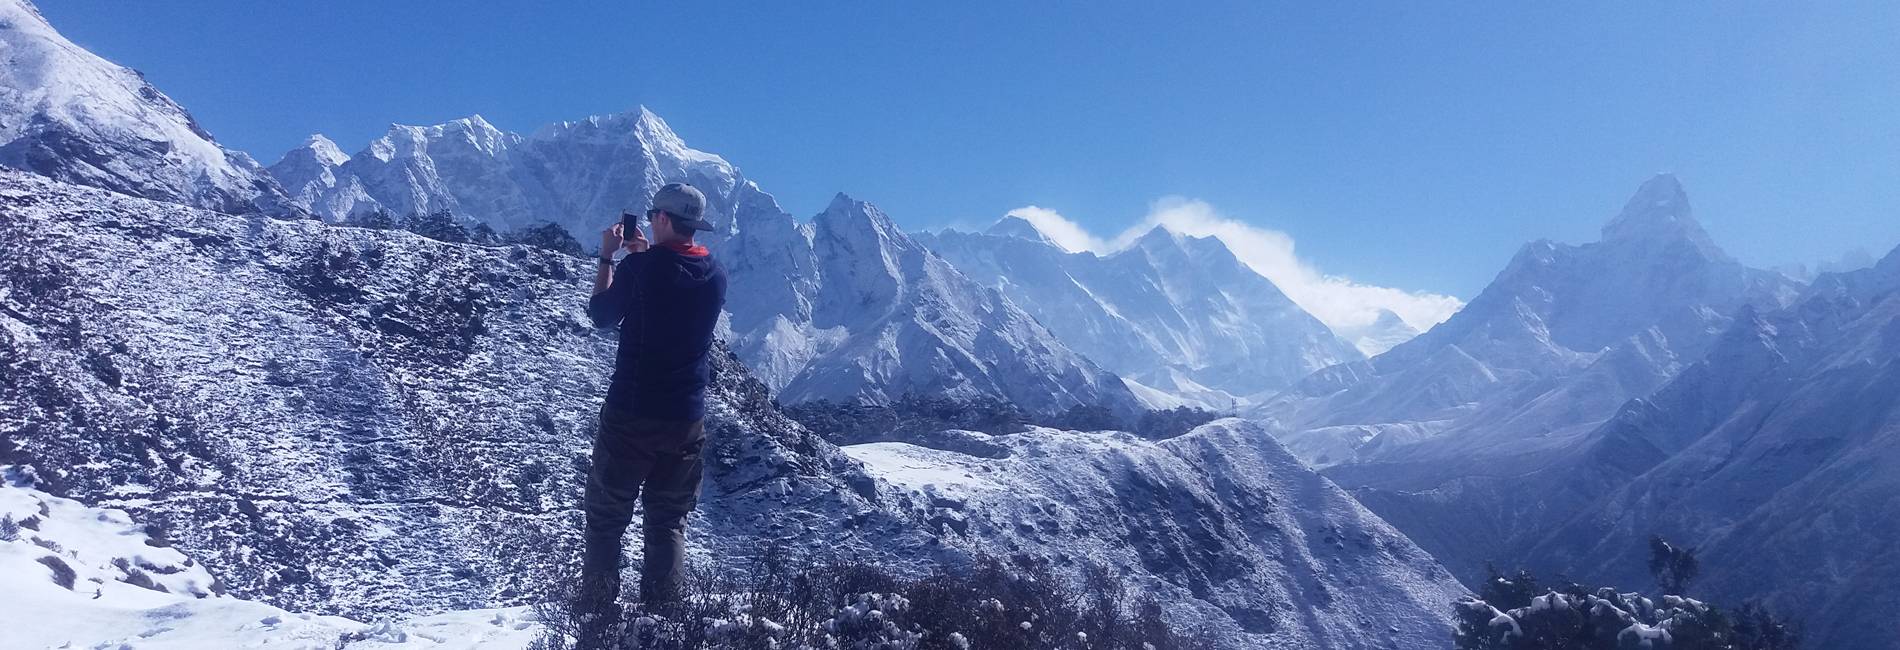 Short Everest Base Camp Trek: EBC Trek 11 Days Itinerary And Cost